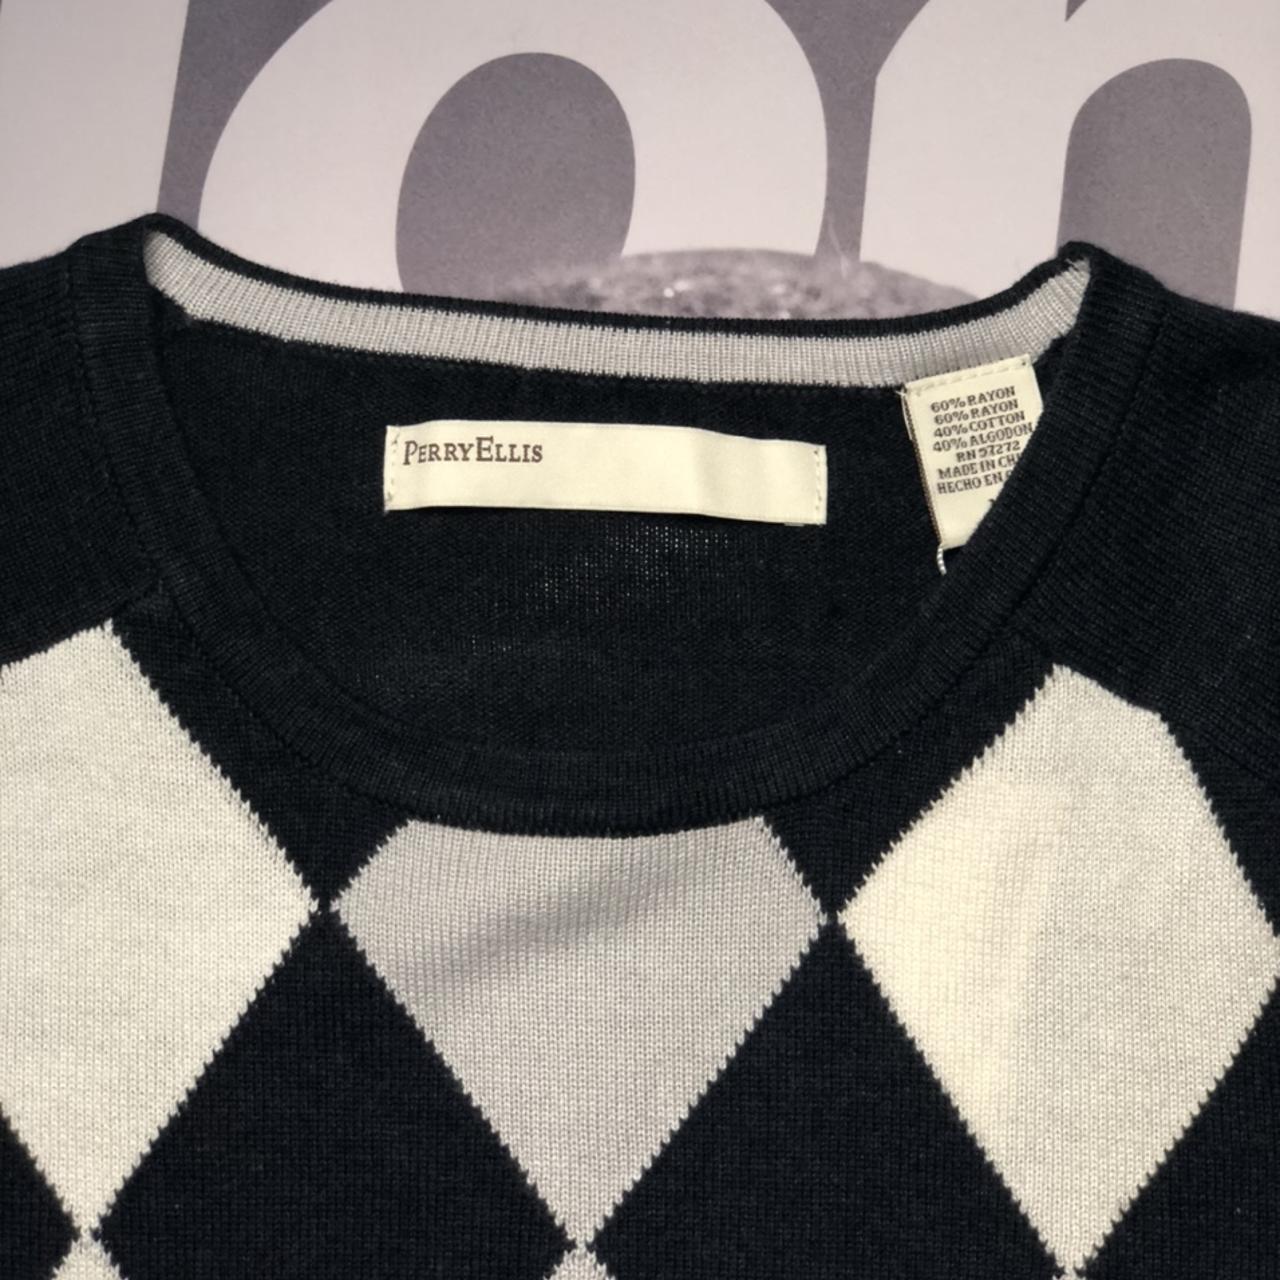 Product Image 4 - Perry Ellis Argyle Sweater

Brand new